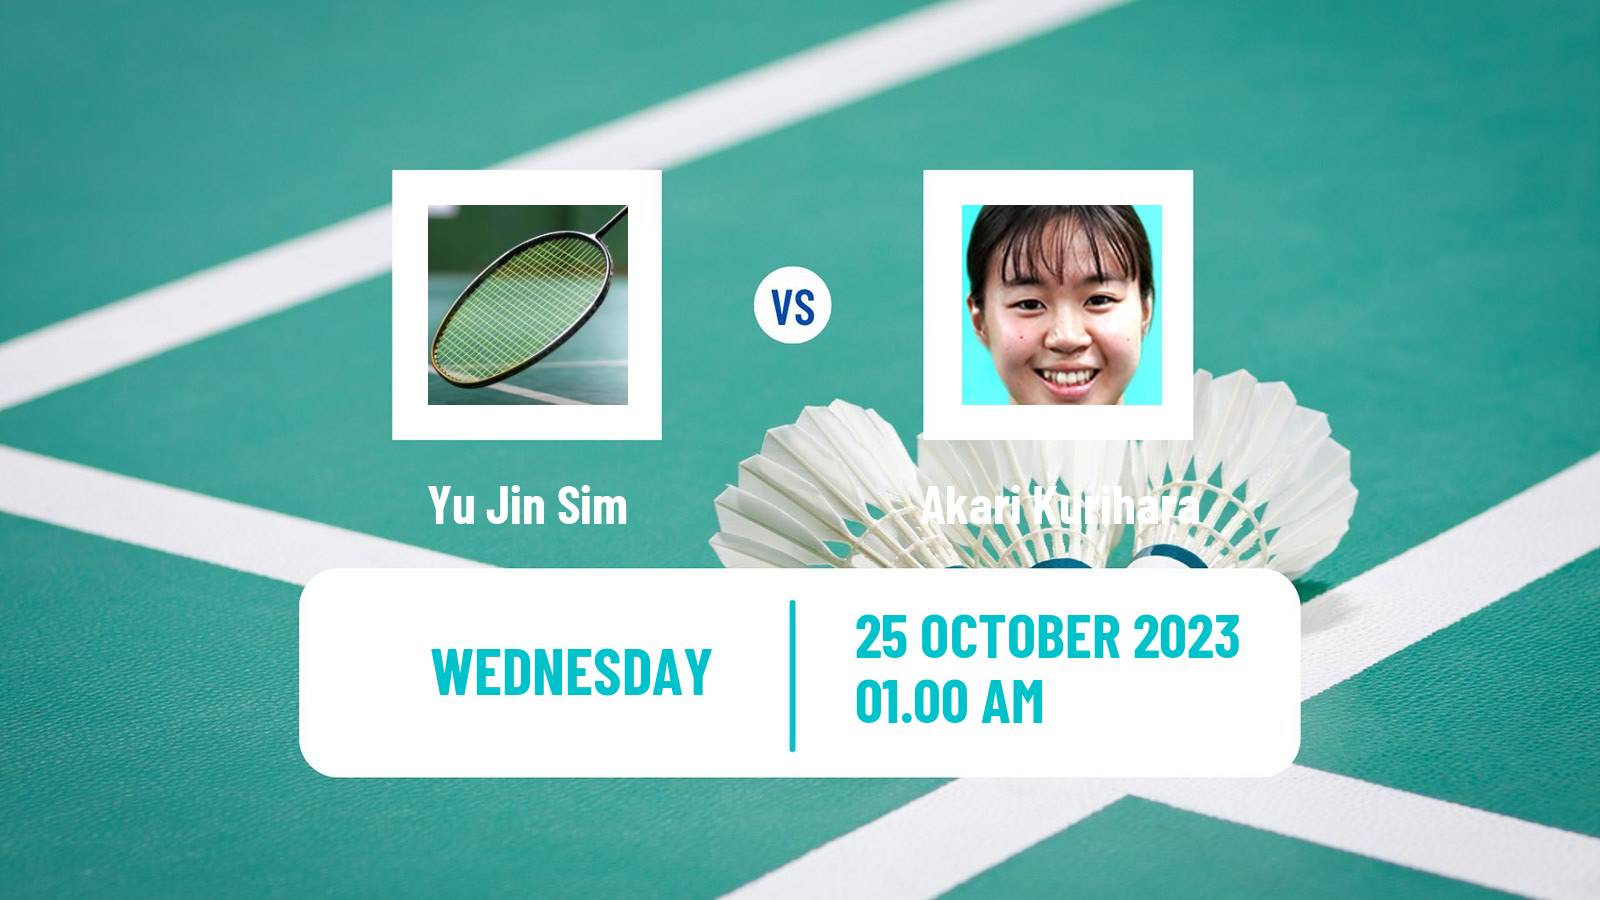 Badminton BWF World Tour Indonesia Masters 3 Women Yu Jin Sim - Akari Kurihara